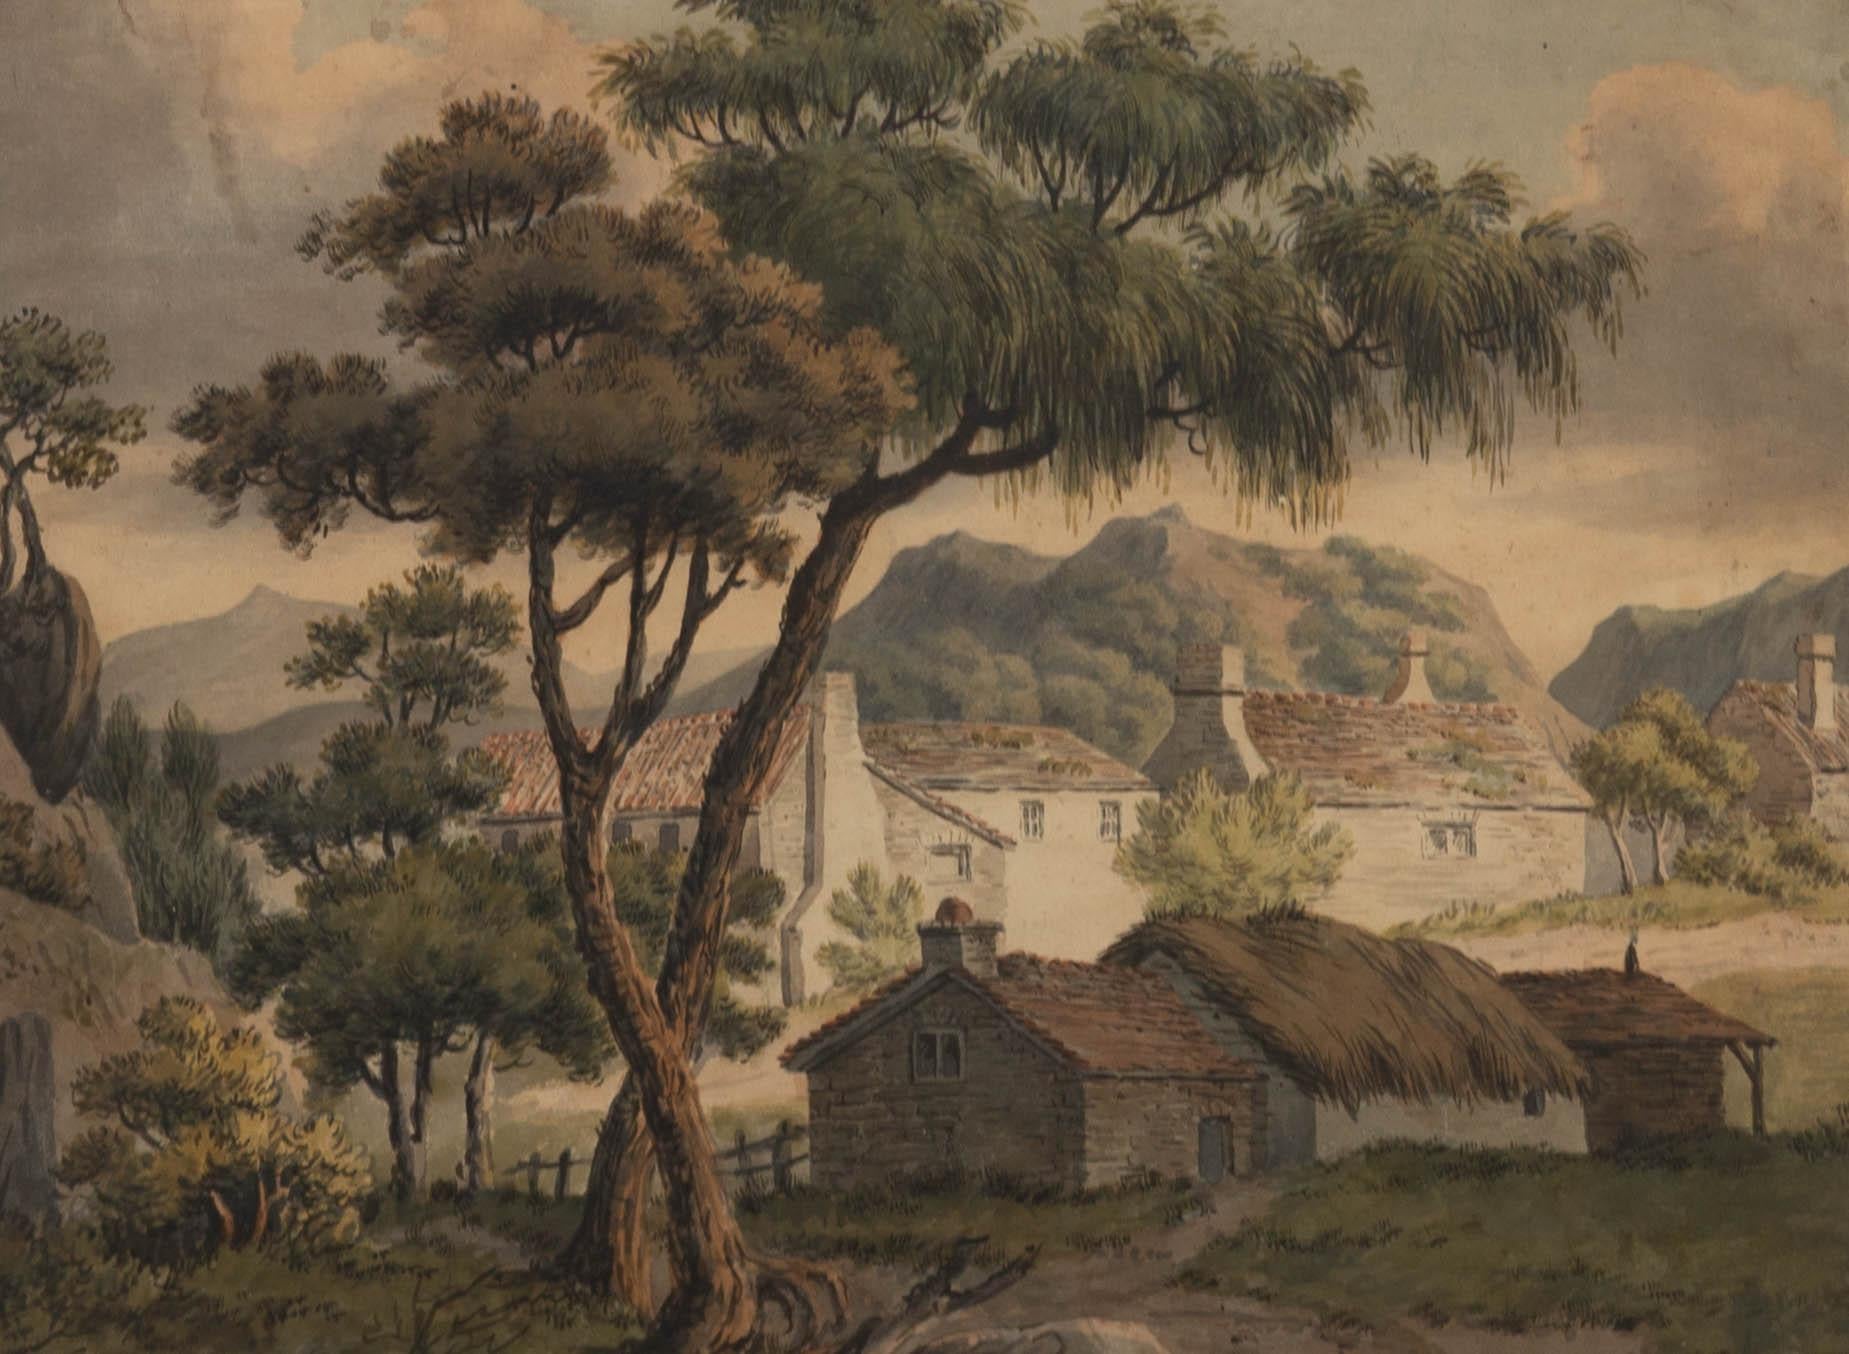 Unknown Landscape Art - 18th Century Watercolour - Rustic Village